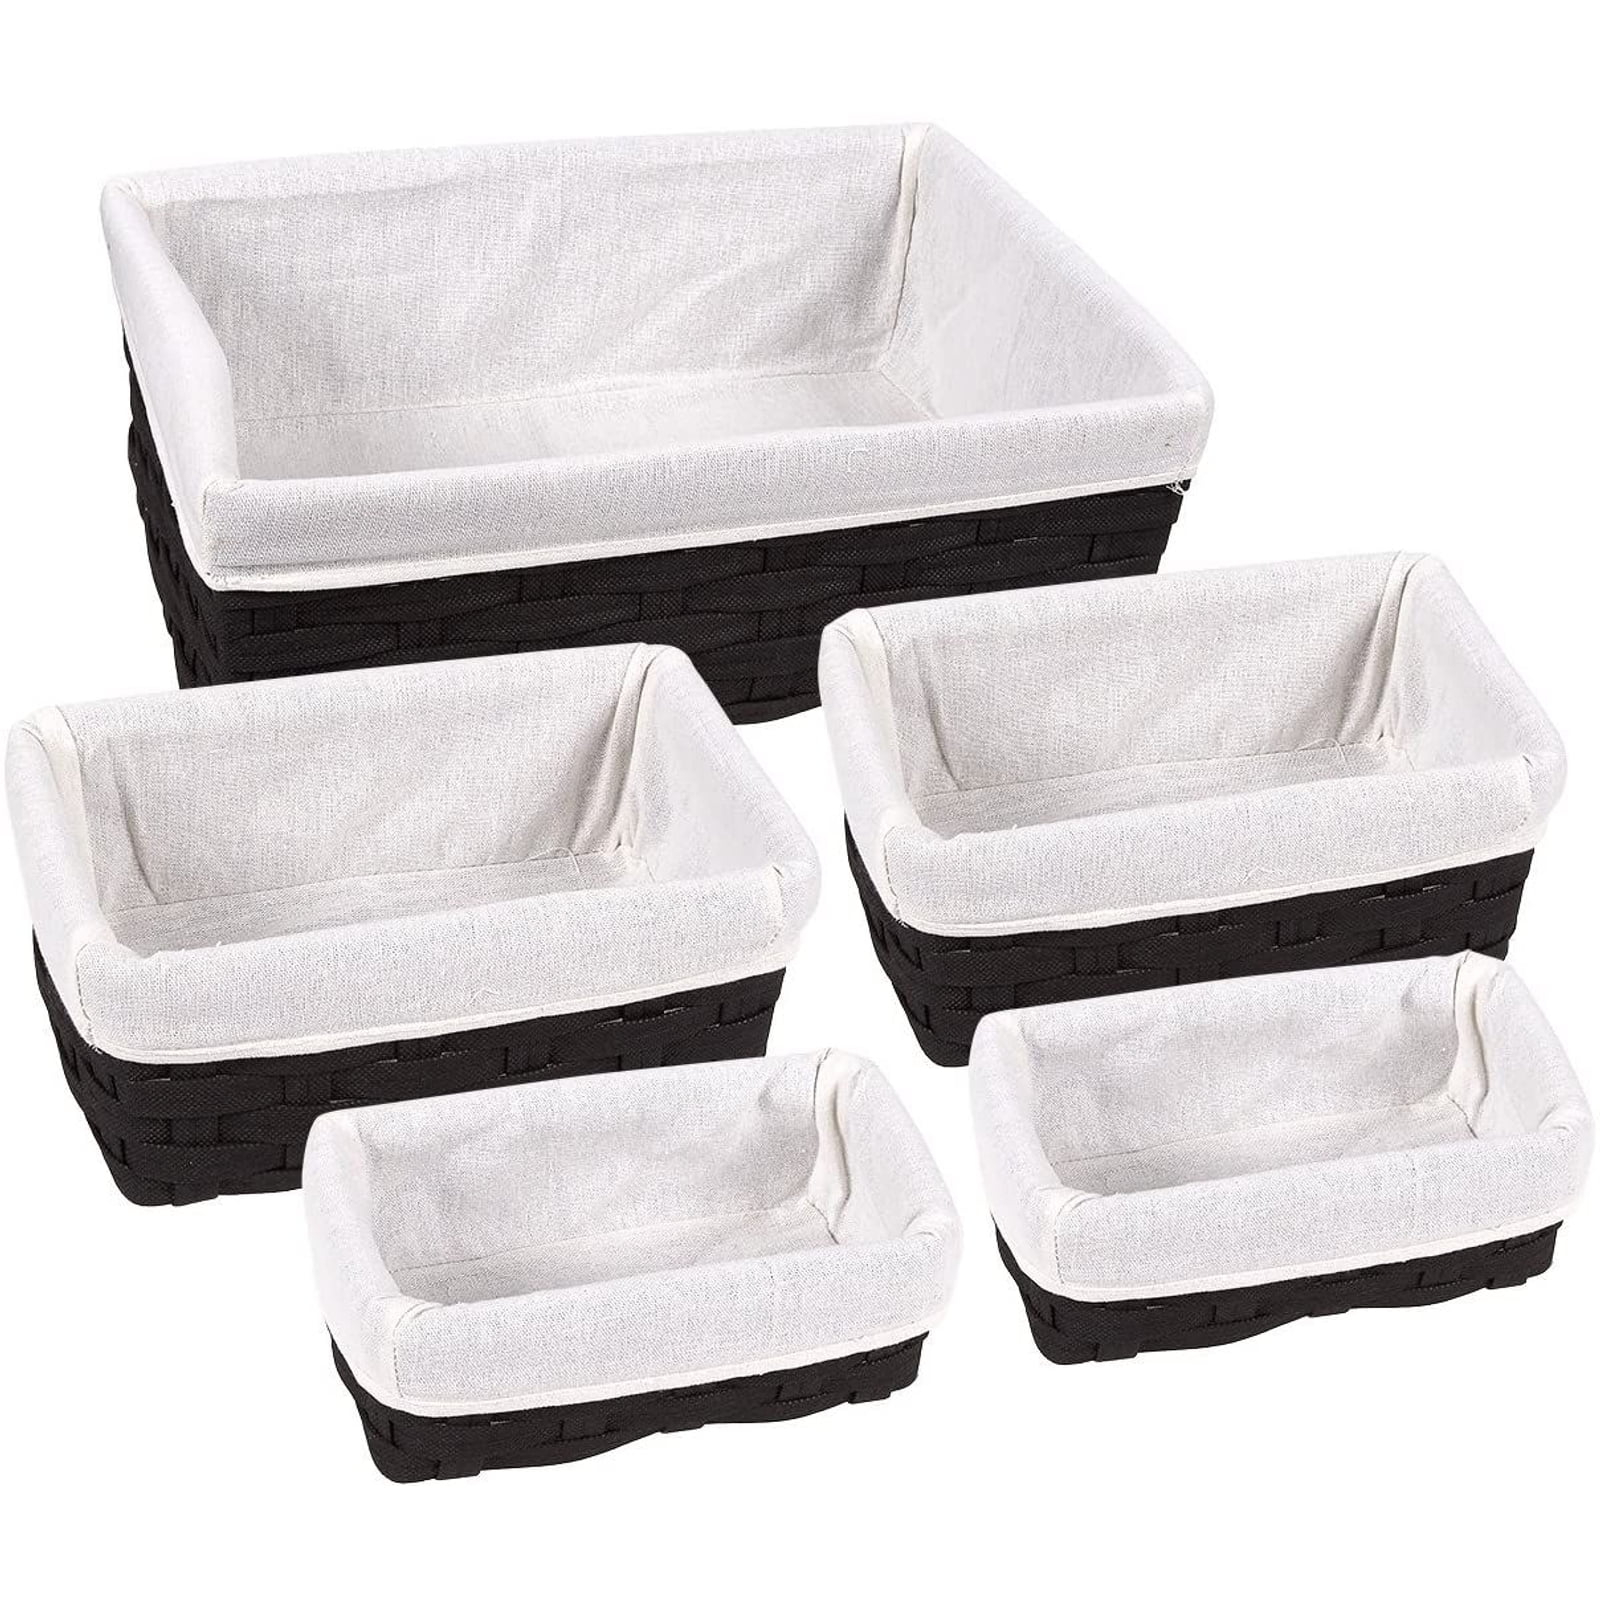 Storage Basket Set 5-Different Sizes Rectangle Plastic Wicker in Black Finish 